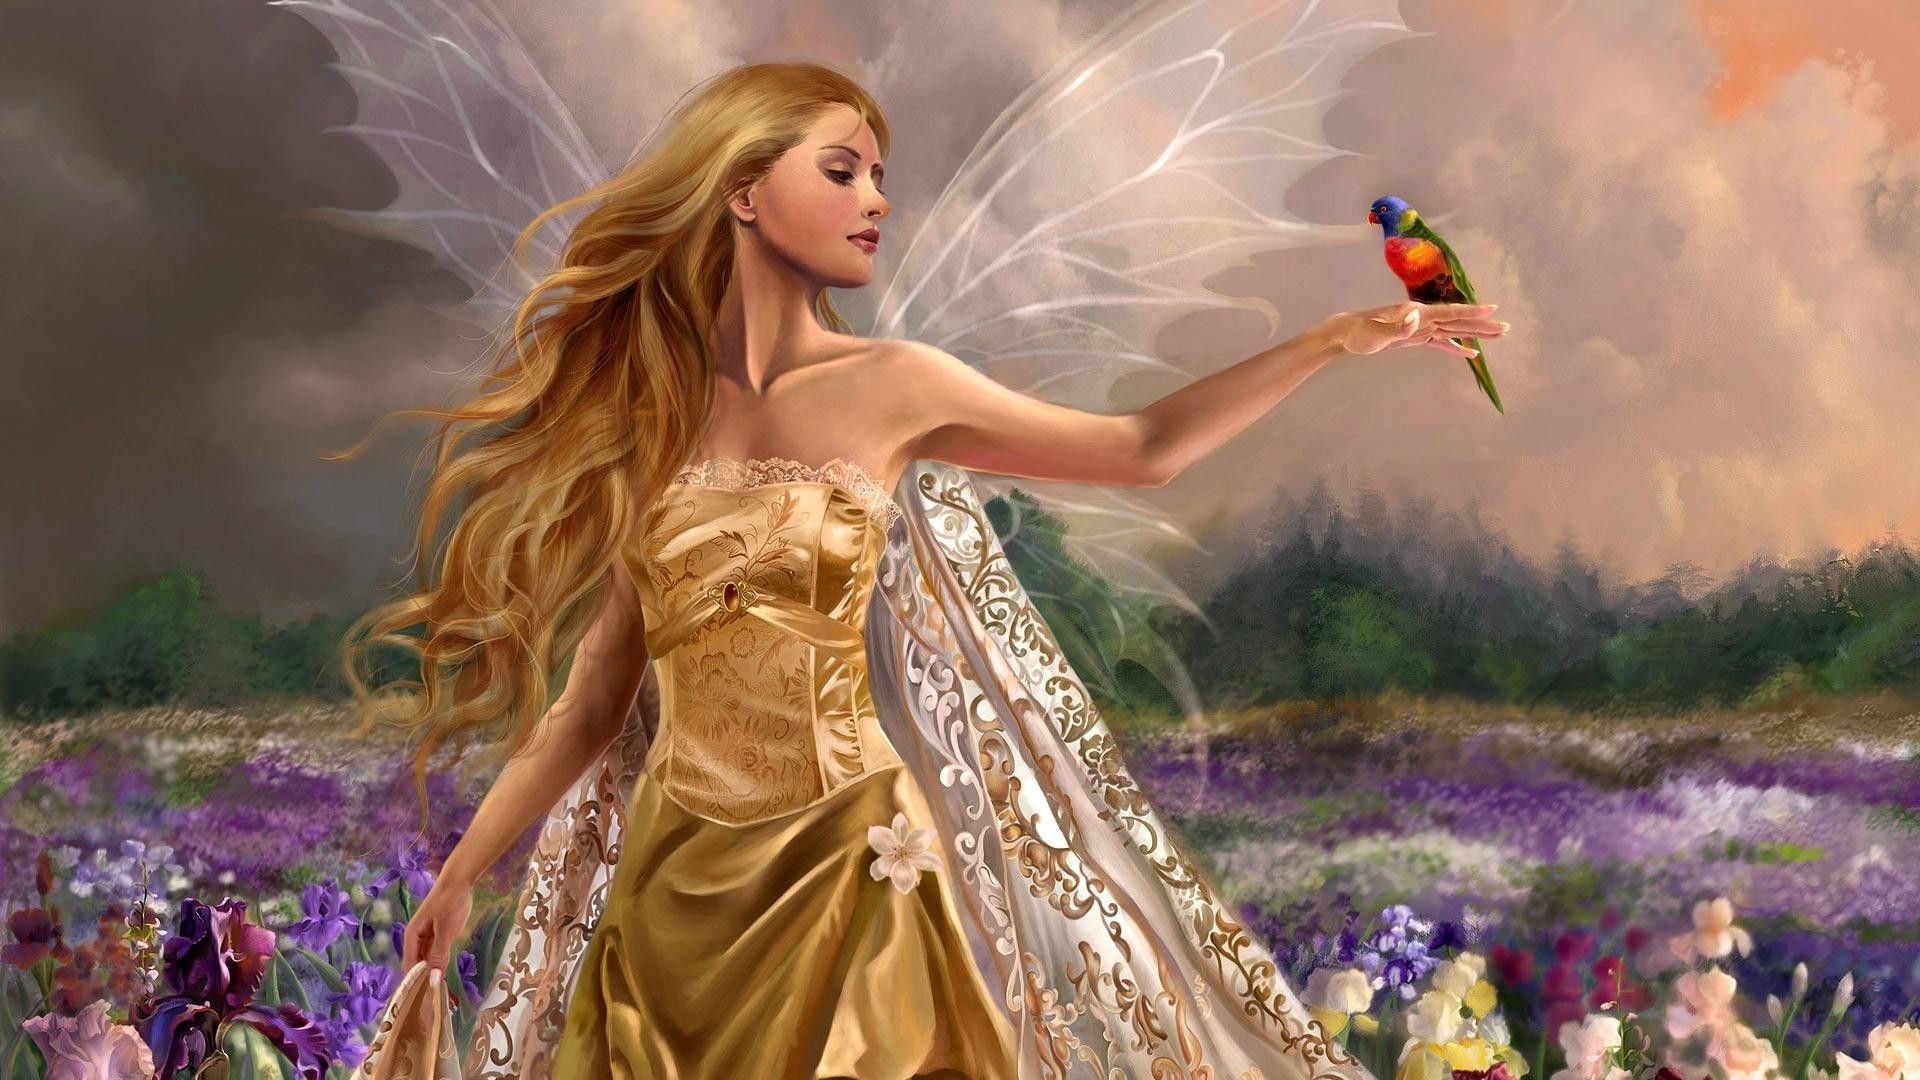 Download Fantasy Image Fairy Wallpaper | Full HD Wallpapers